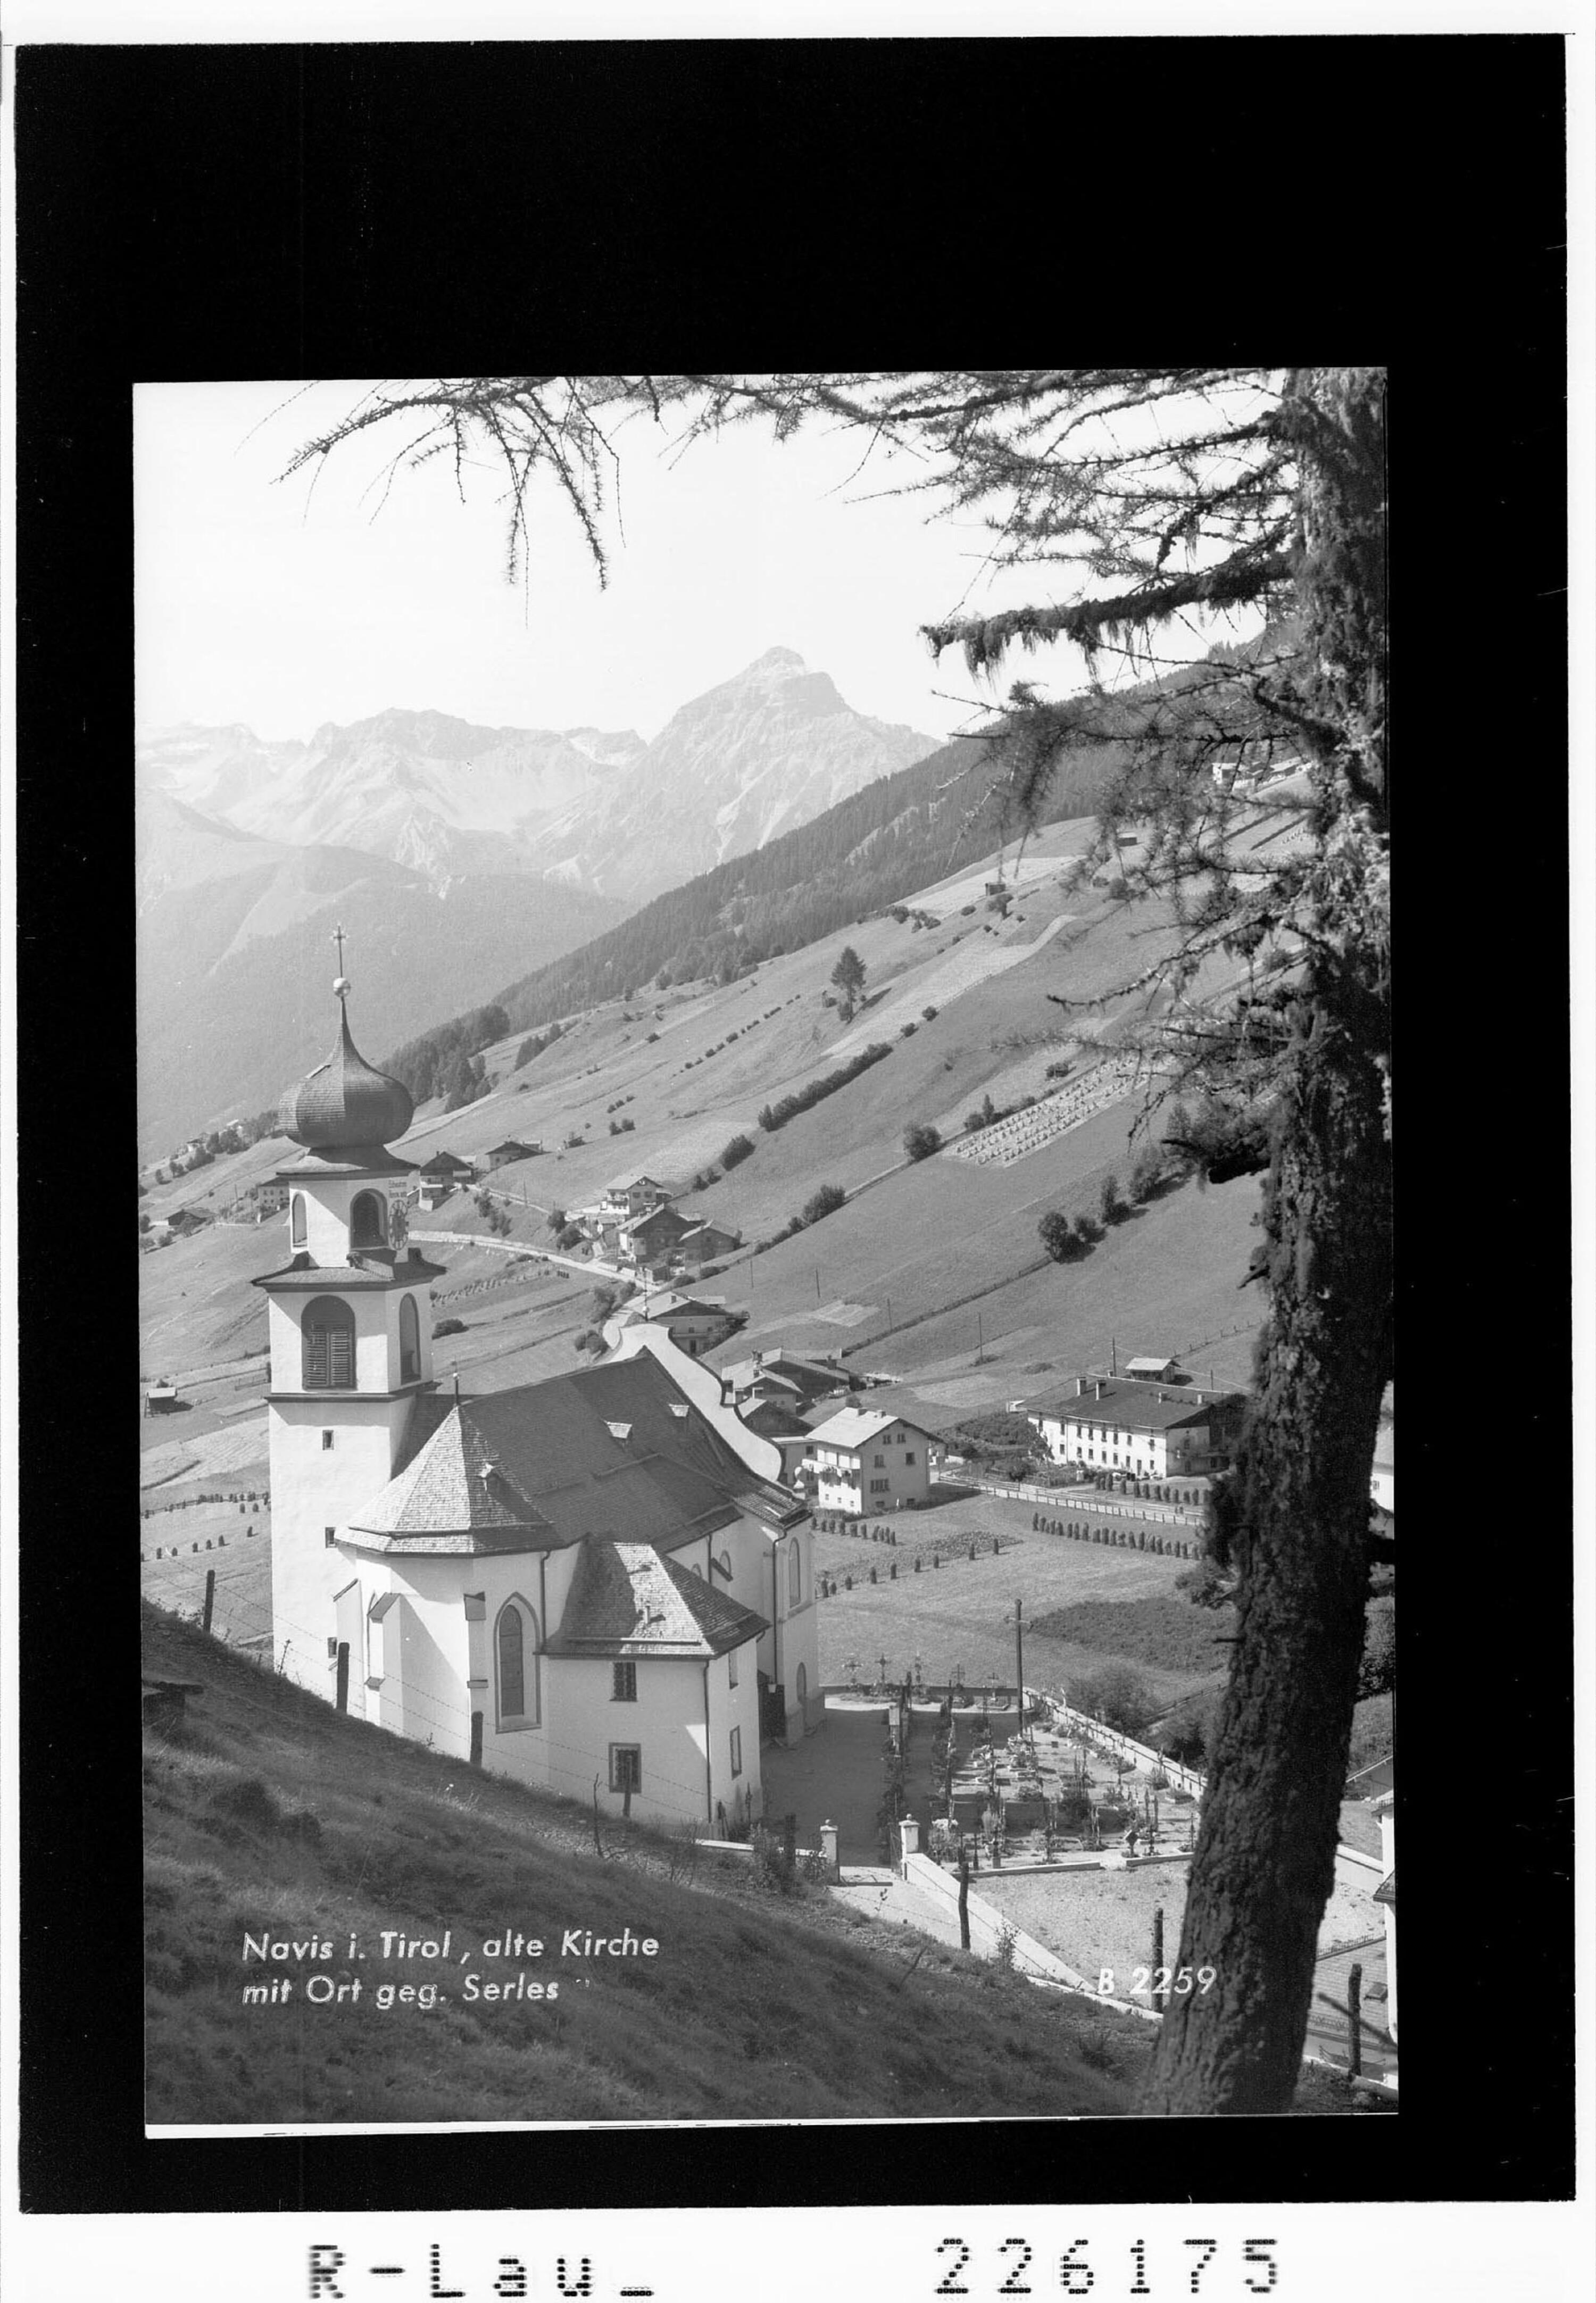 Navis in Tirol / alte Kirche mit Ort gegen Serles></div>


    <hr>
    <div class=